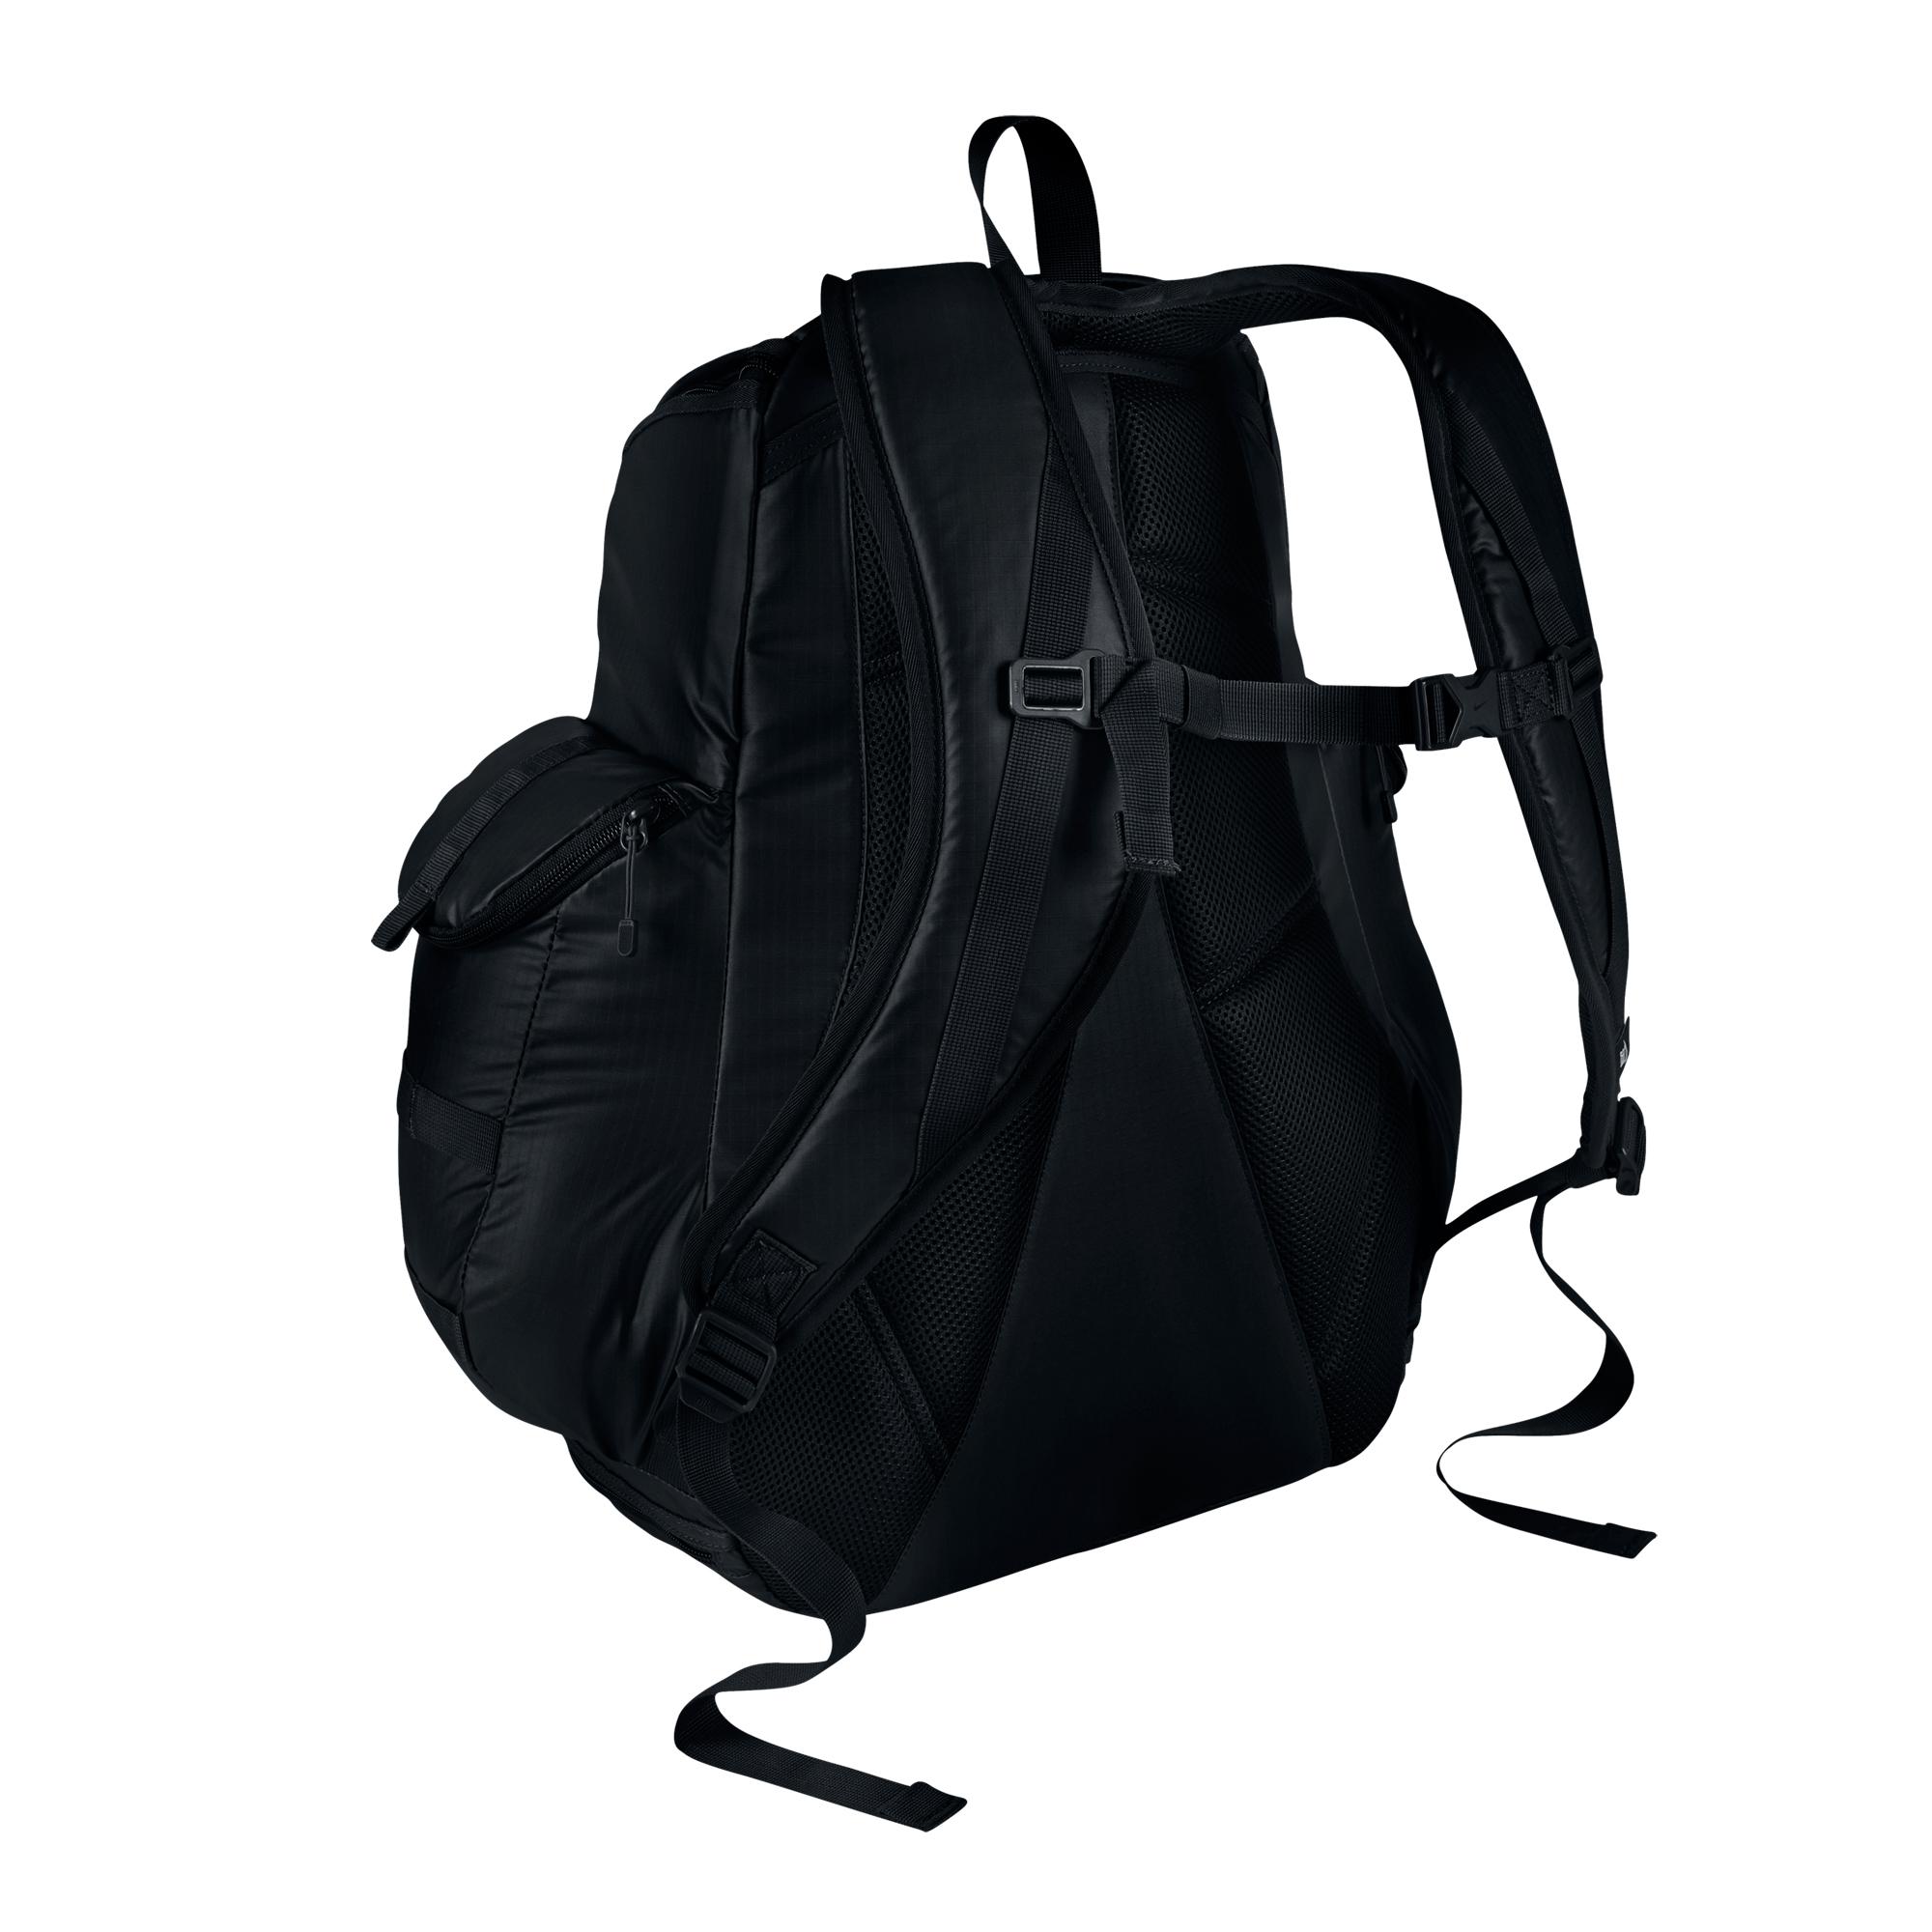 Nike Synthetic Nike Cheyenne Responder Backpack in Black for Men - Lyst